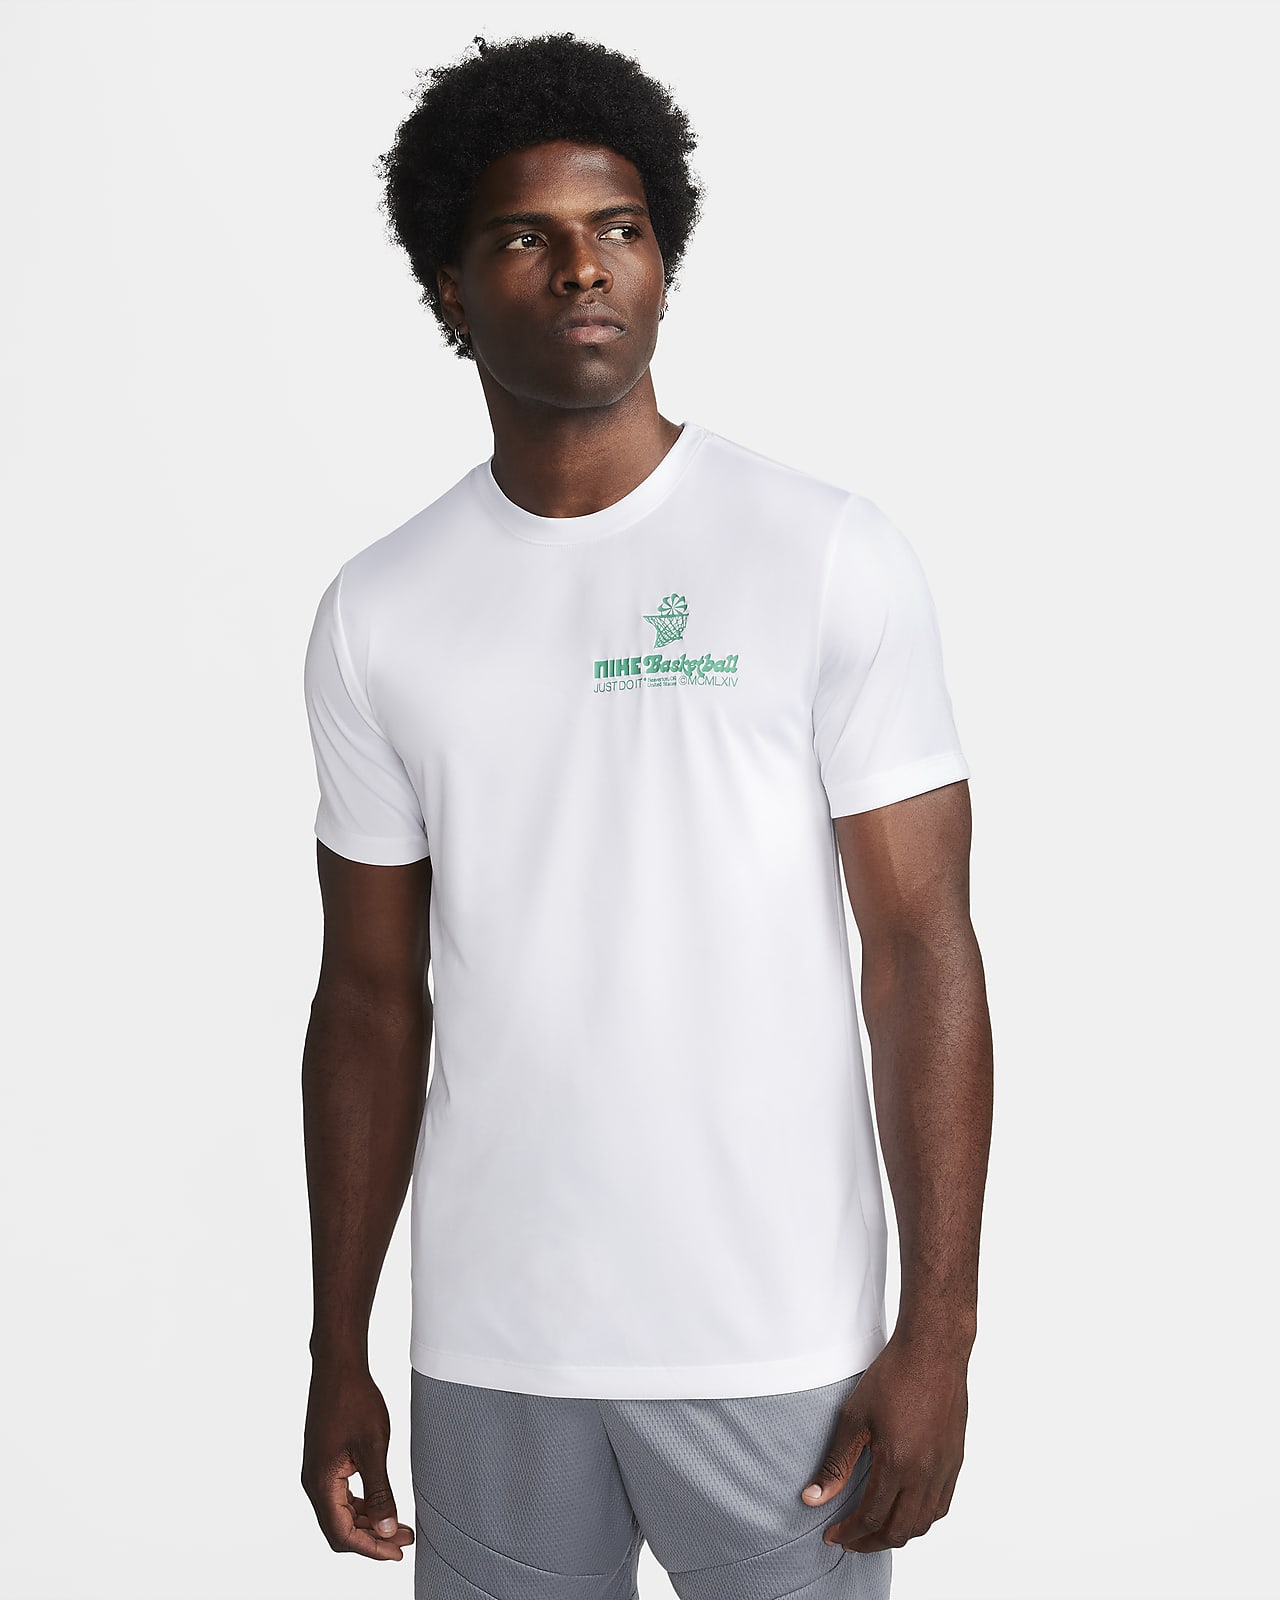 Nike Dri-FIT Camiseta de baloncesto - Hombre